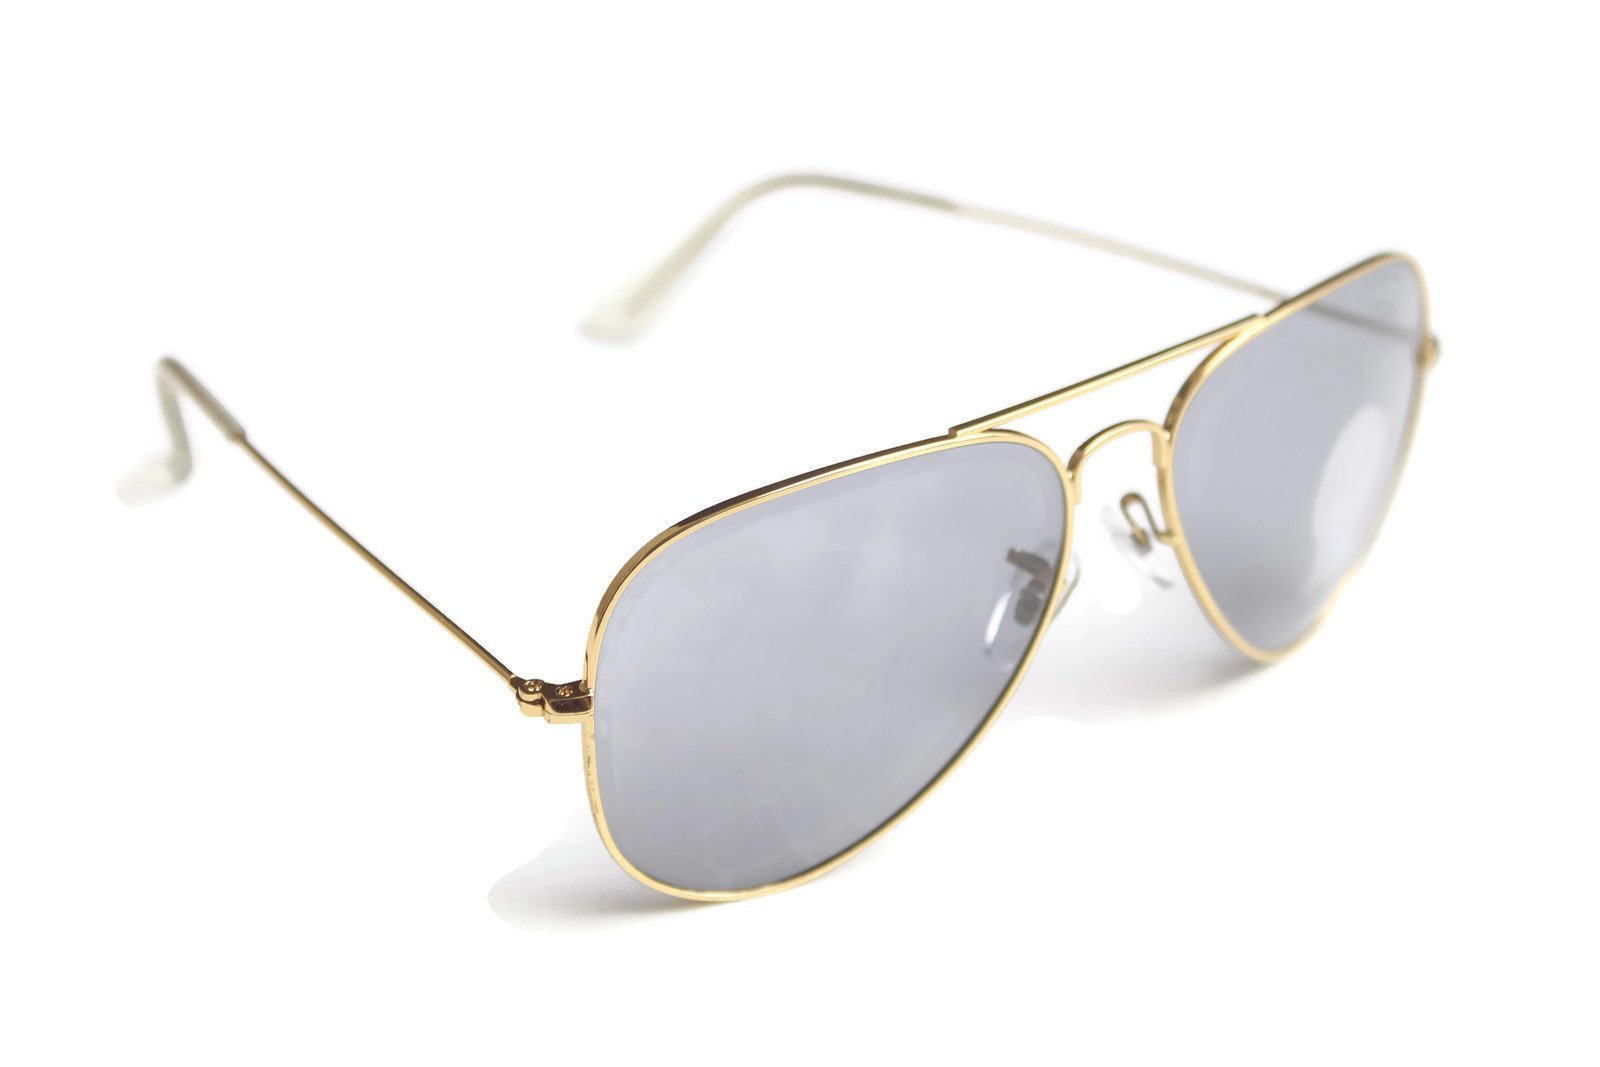 How Should Aviator Sunglasses Fit? – Randolph USA